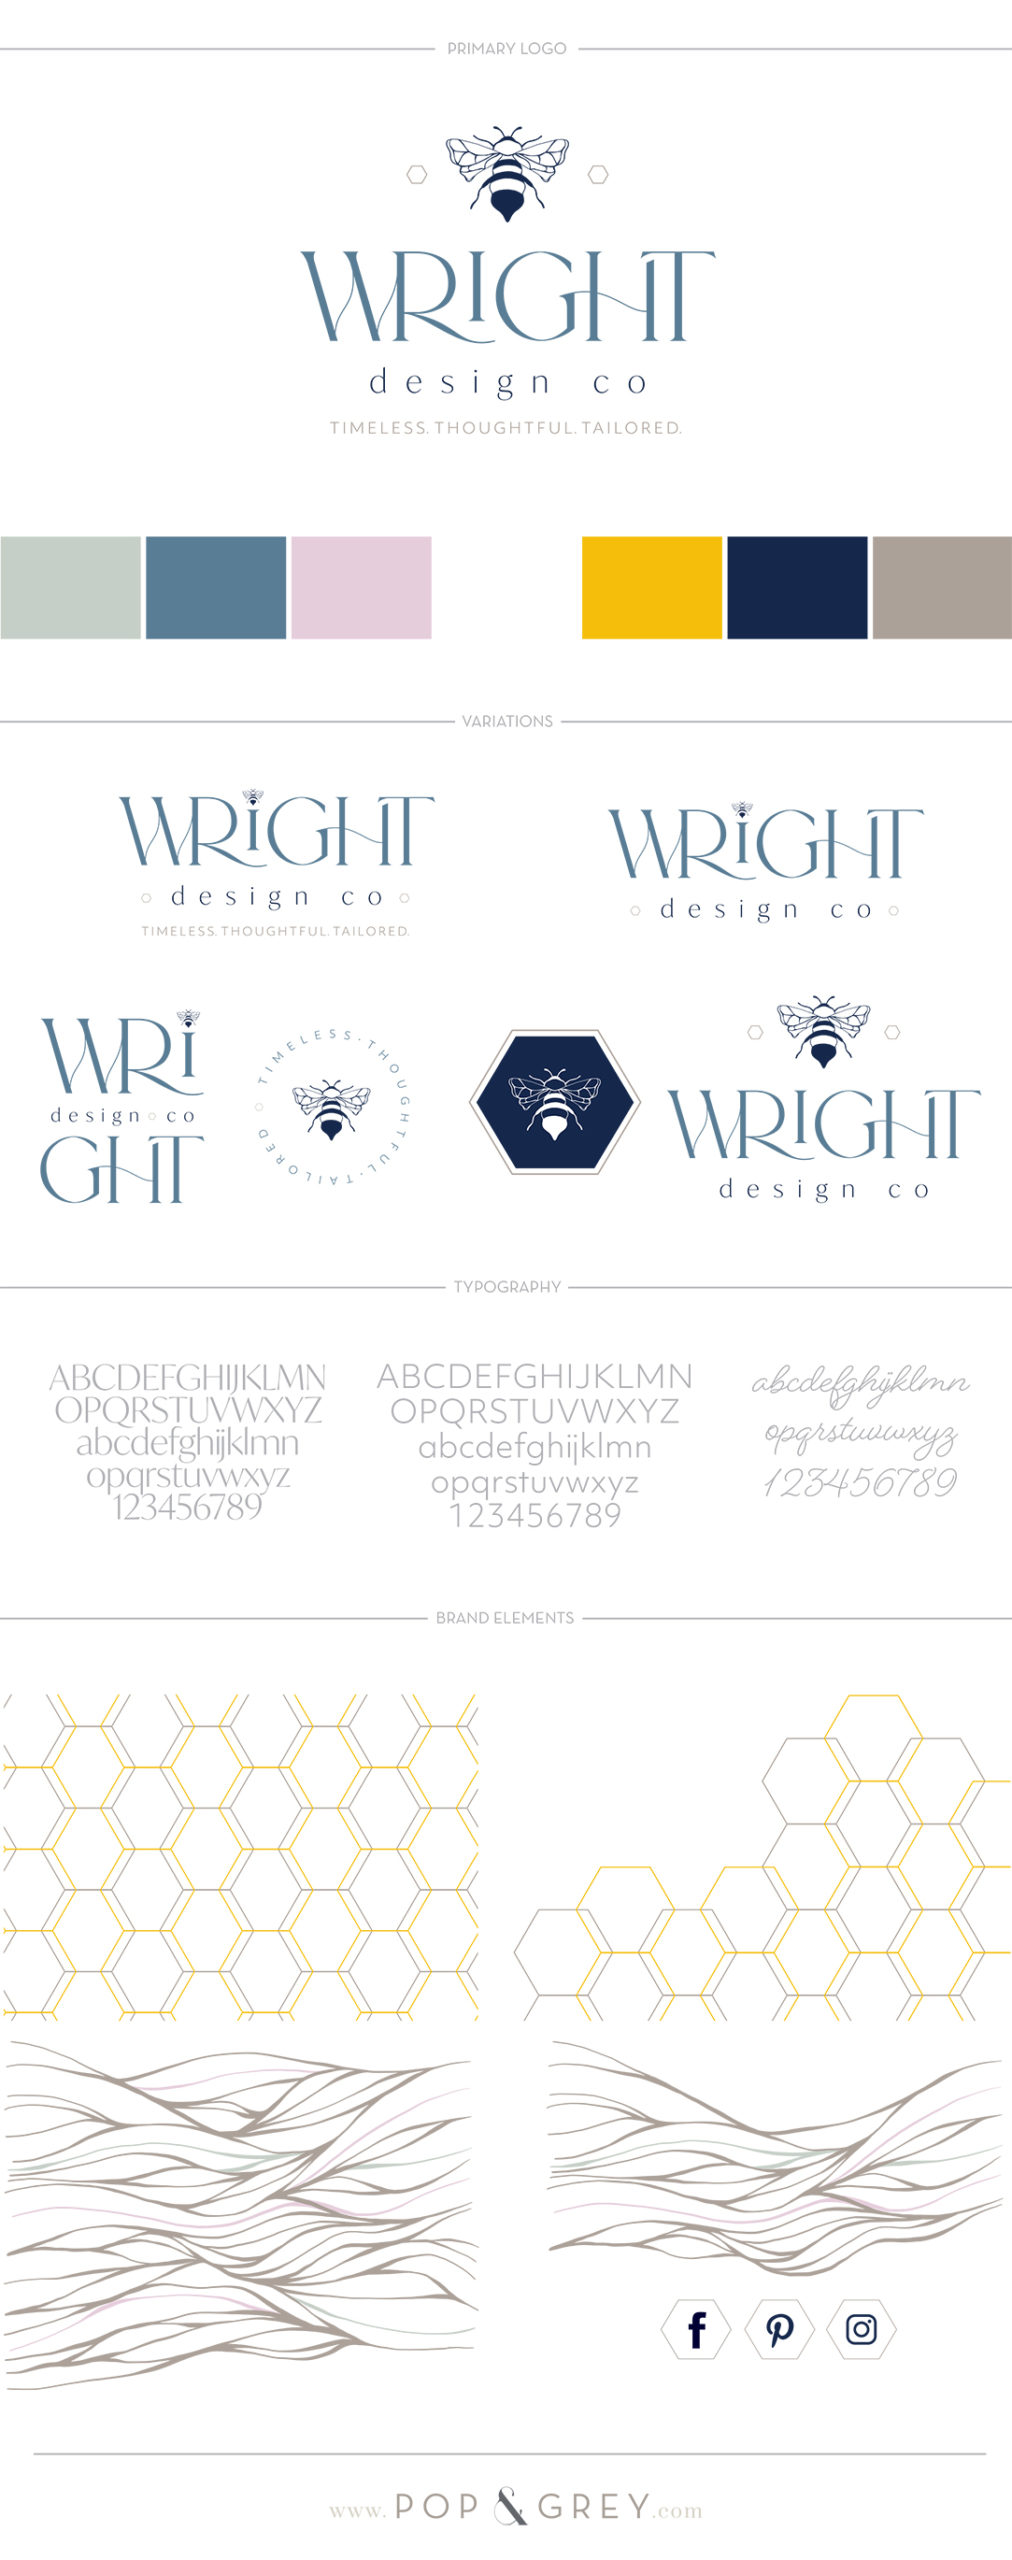 Wright Design Co brand design by Pop & Grey